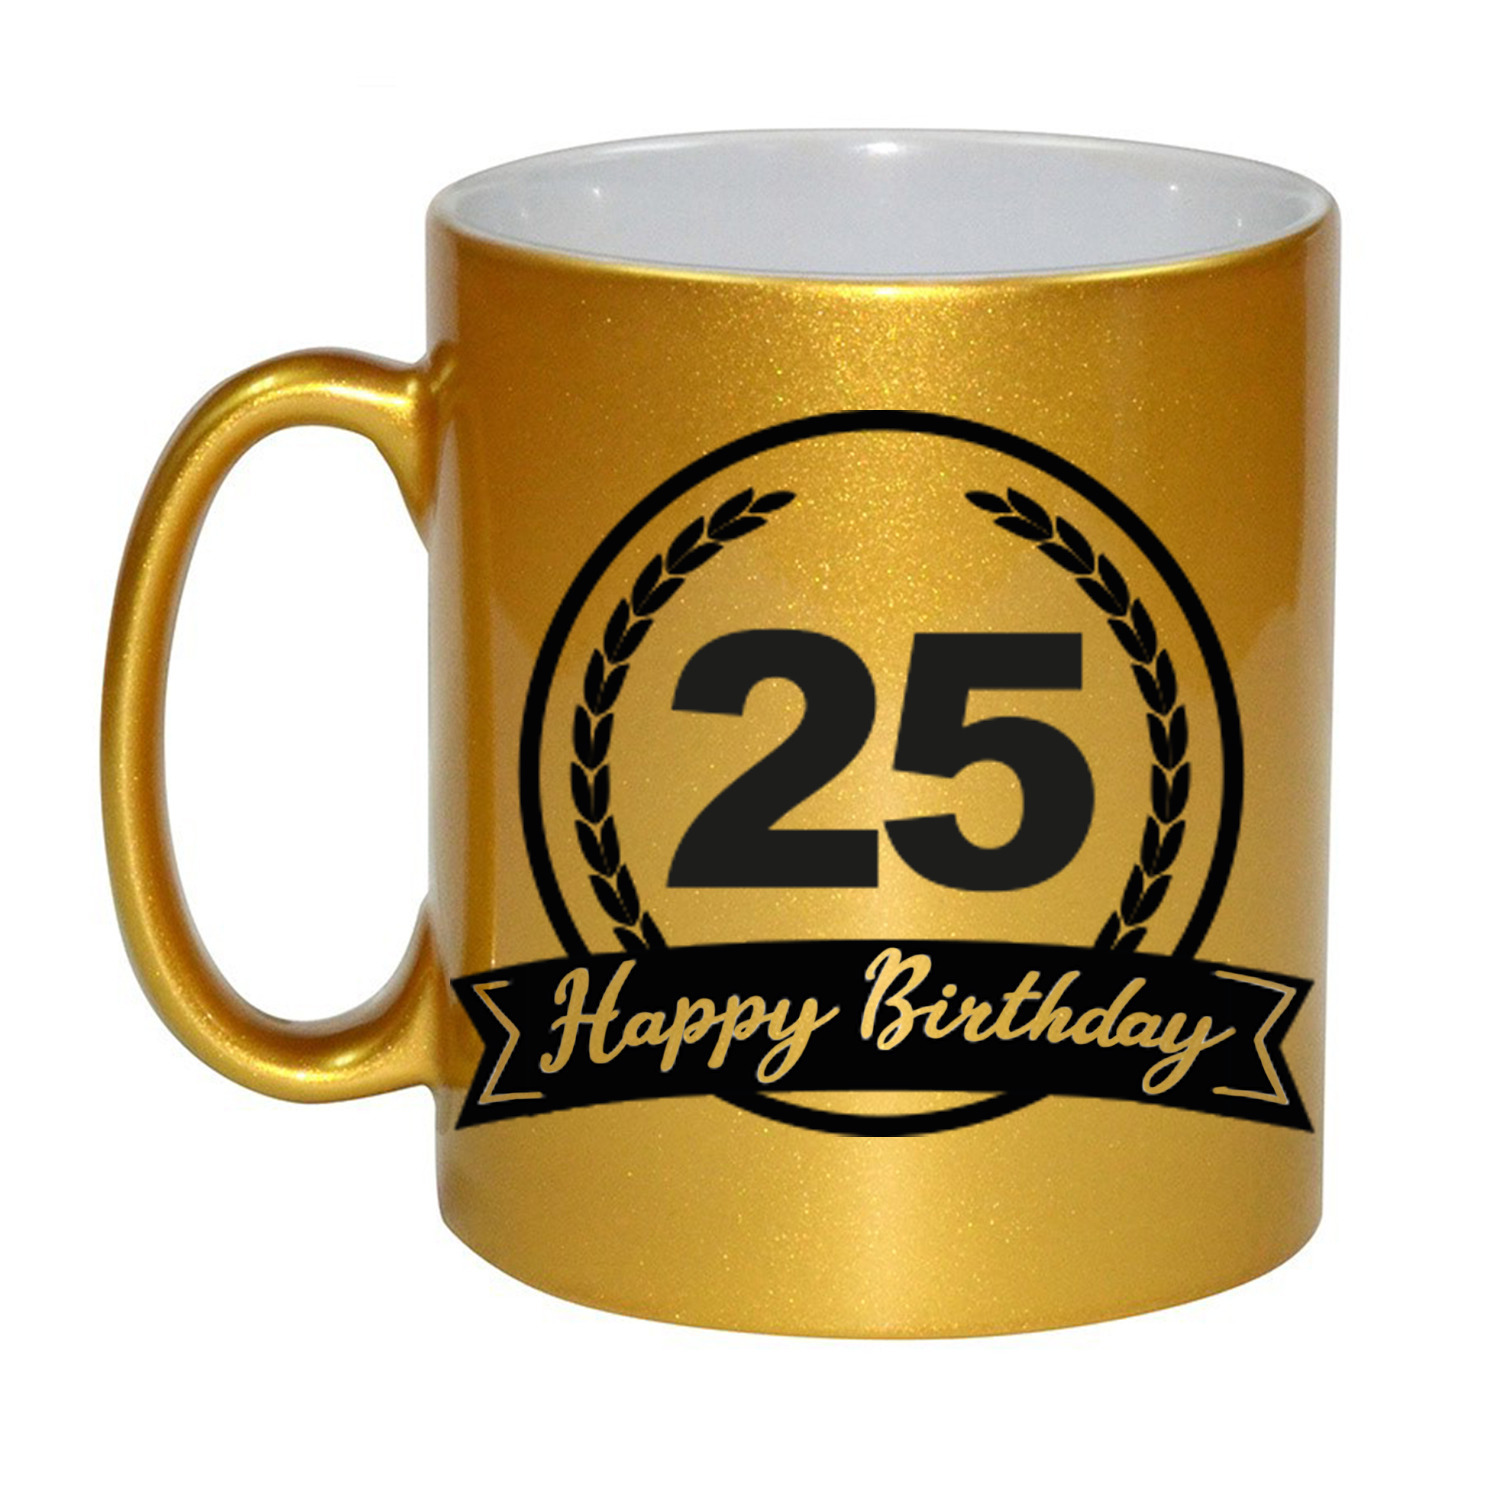 Happy Birthday 25 years gouden cadeau mok-beker met wimpel 330 ml